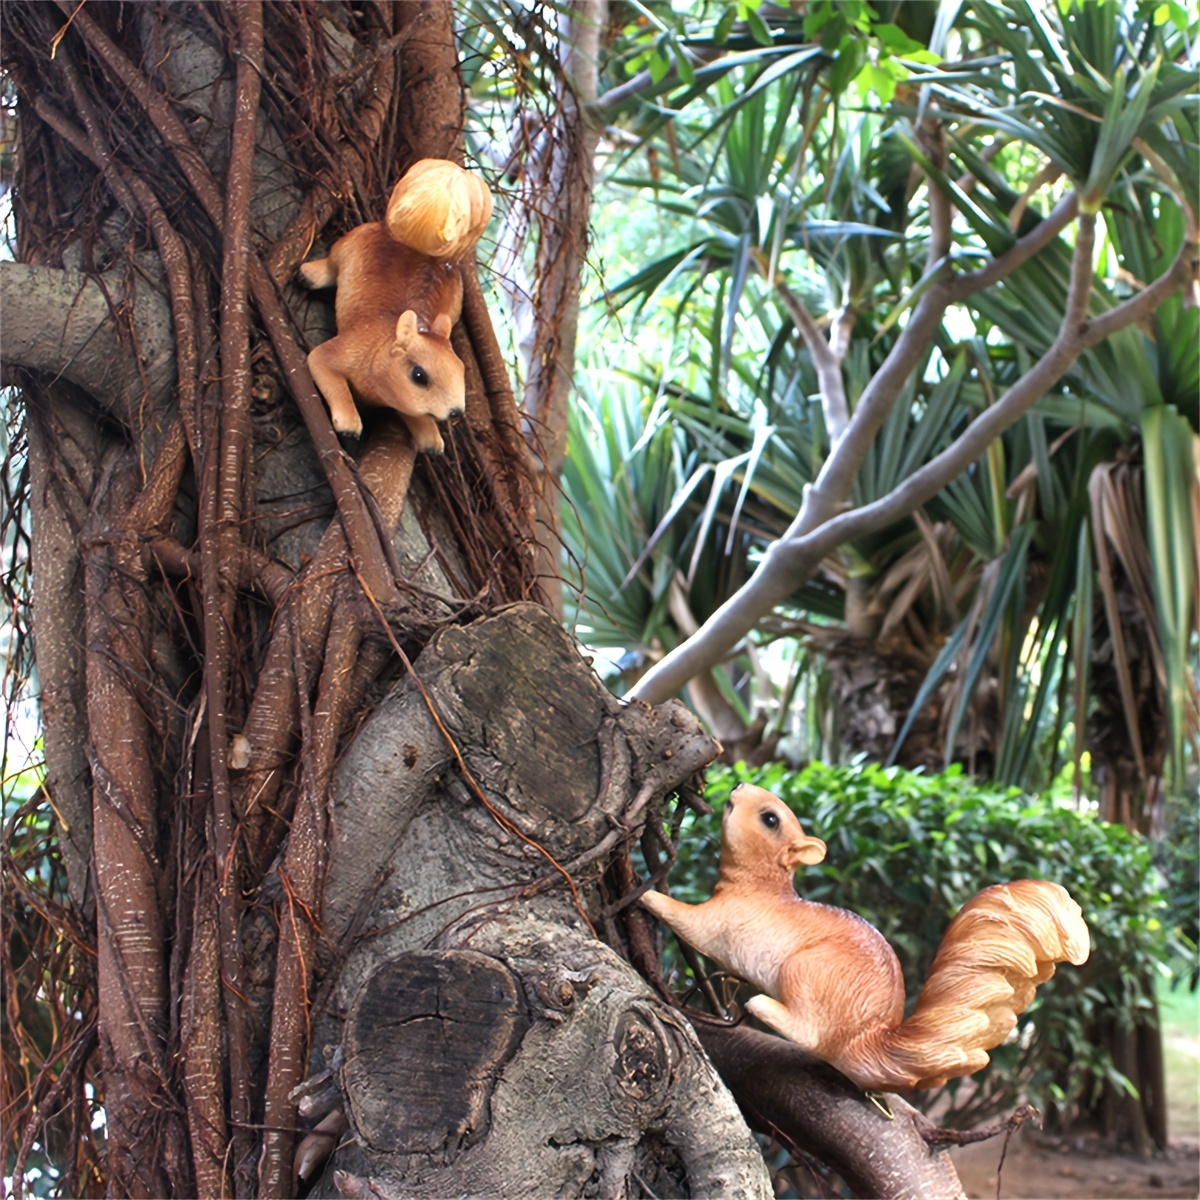 

2pcs 3d Squirrel Tree Statue, Simulation Animal Squirrel Outdoor Garden Resin Crafts, Fairy Garden Art Ornaments, Landscaping Diy Garden Sculptures, For Yard Lawn Balcony Home Decor, Housewarming Gift